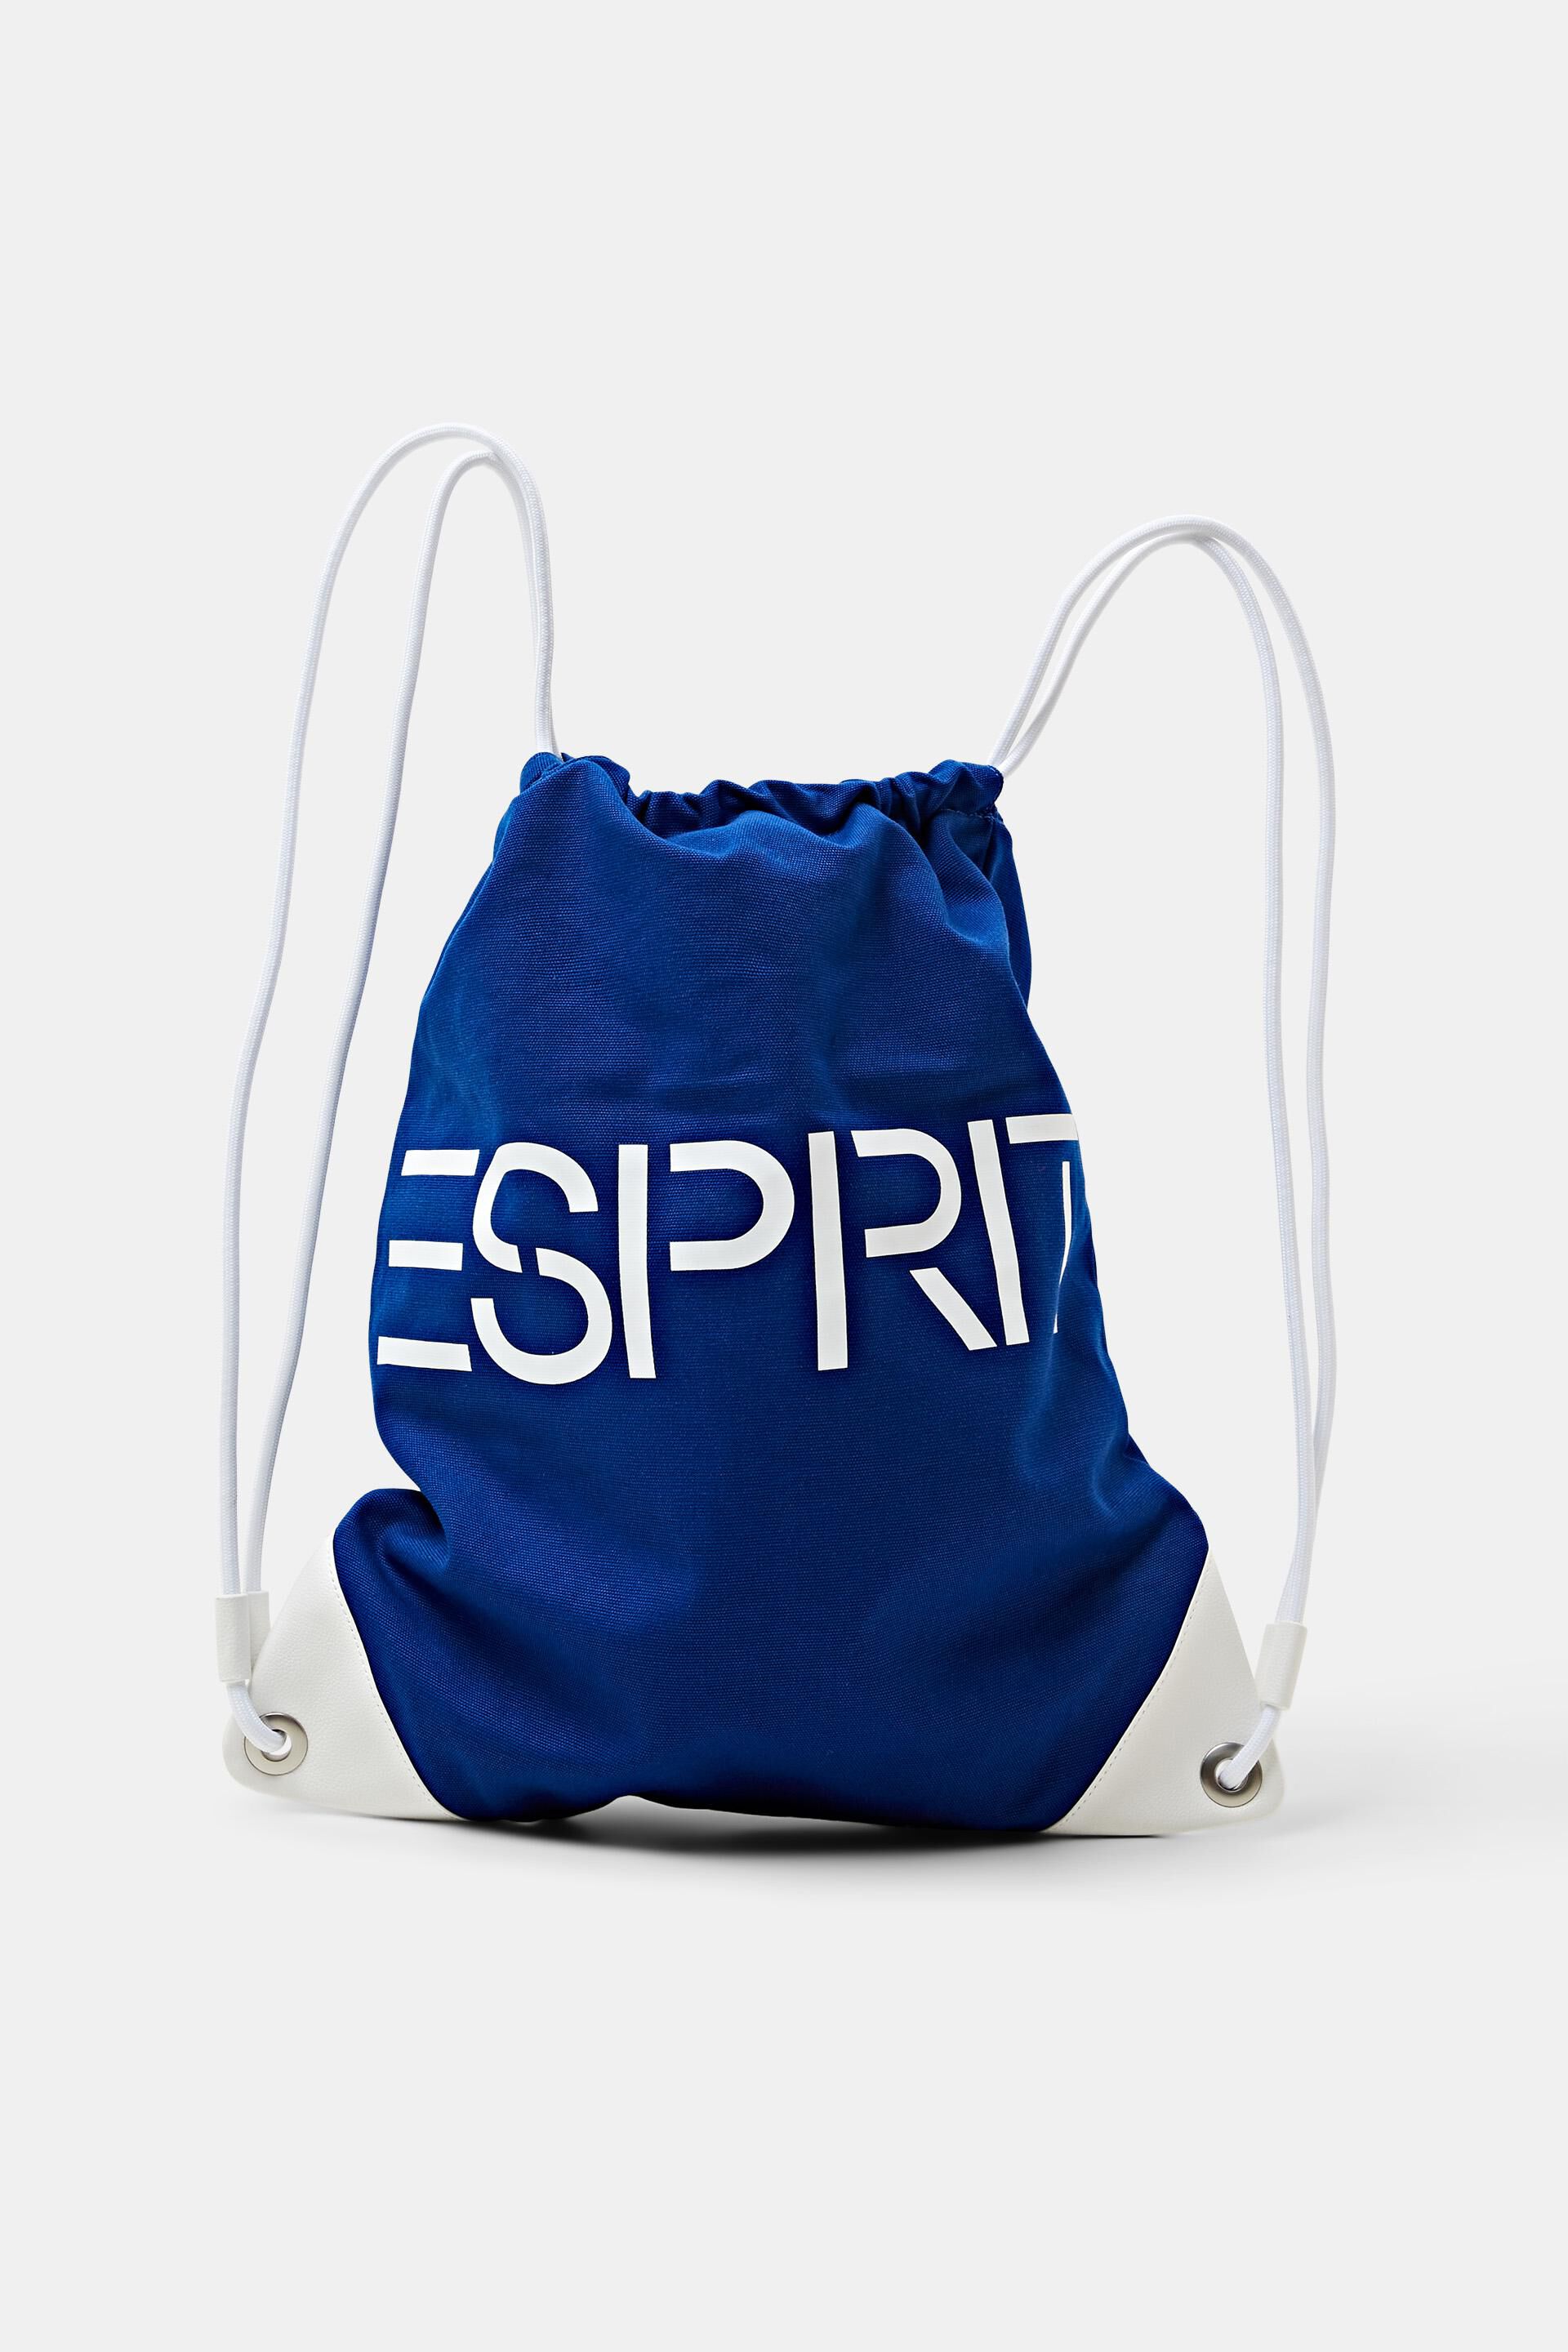 Esprit Cotton Drawstring Canvas Logo Backpack